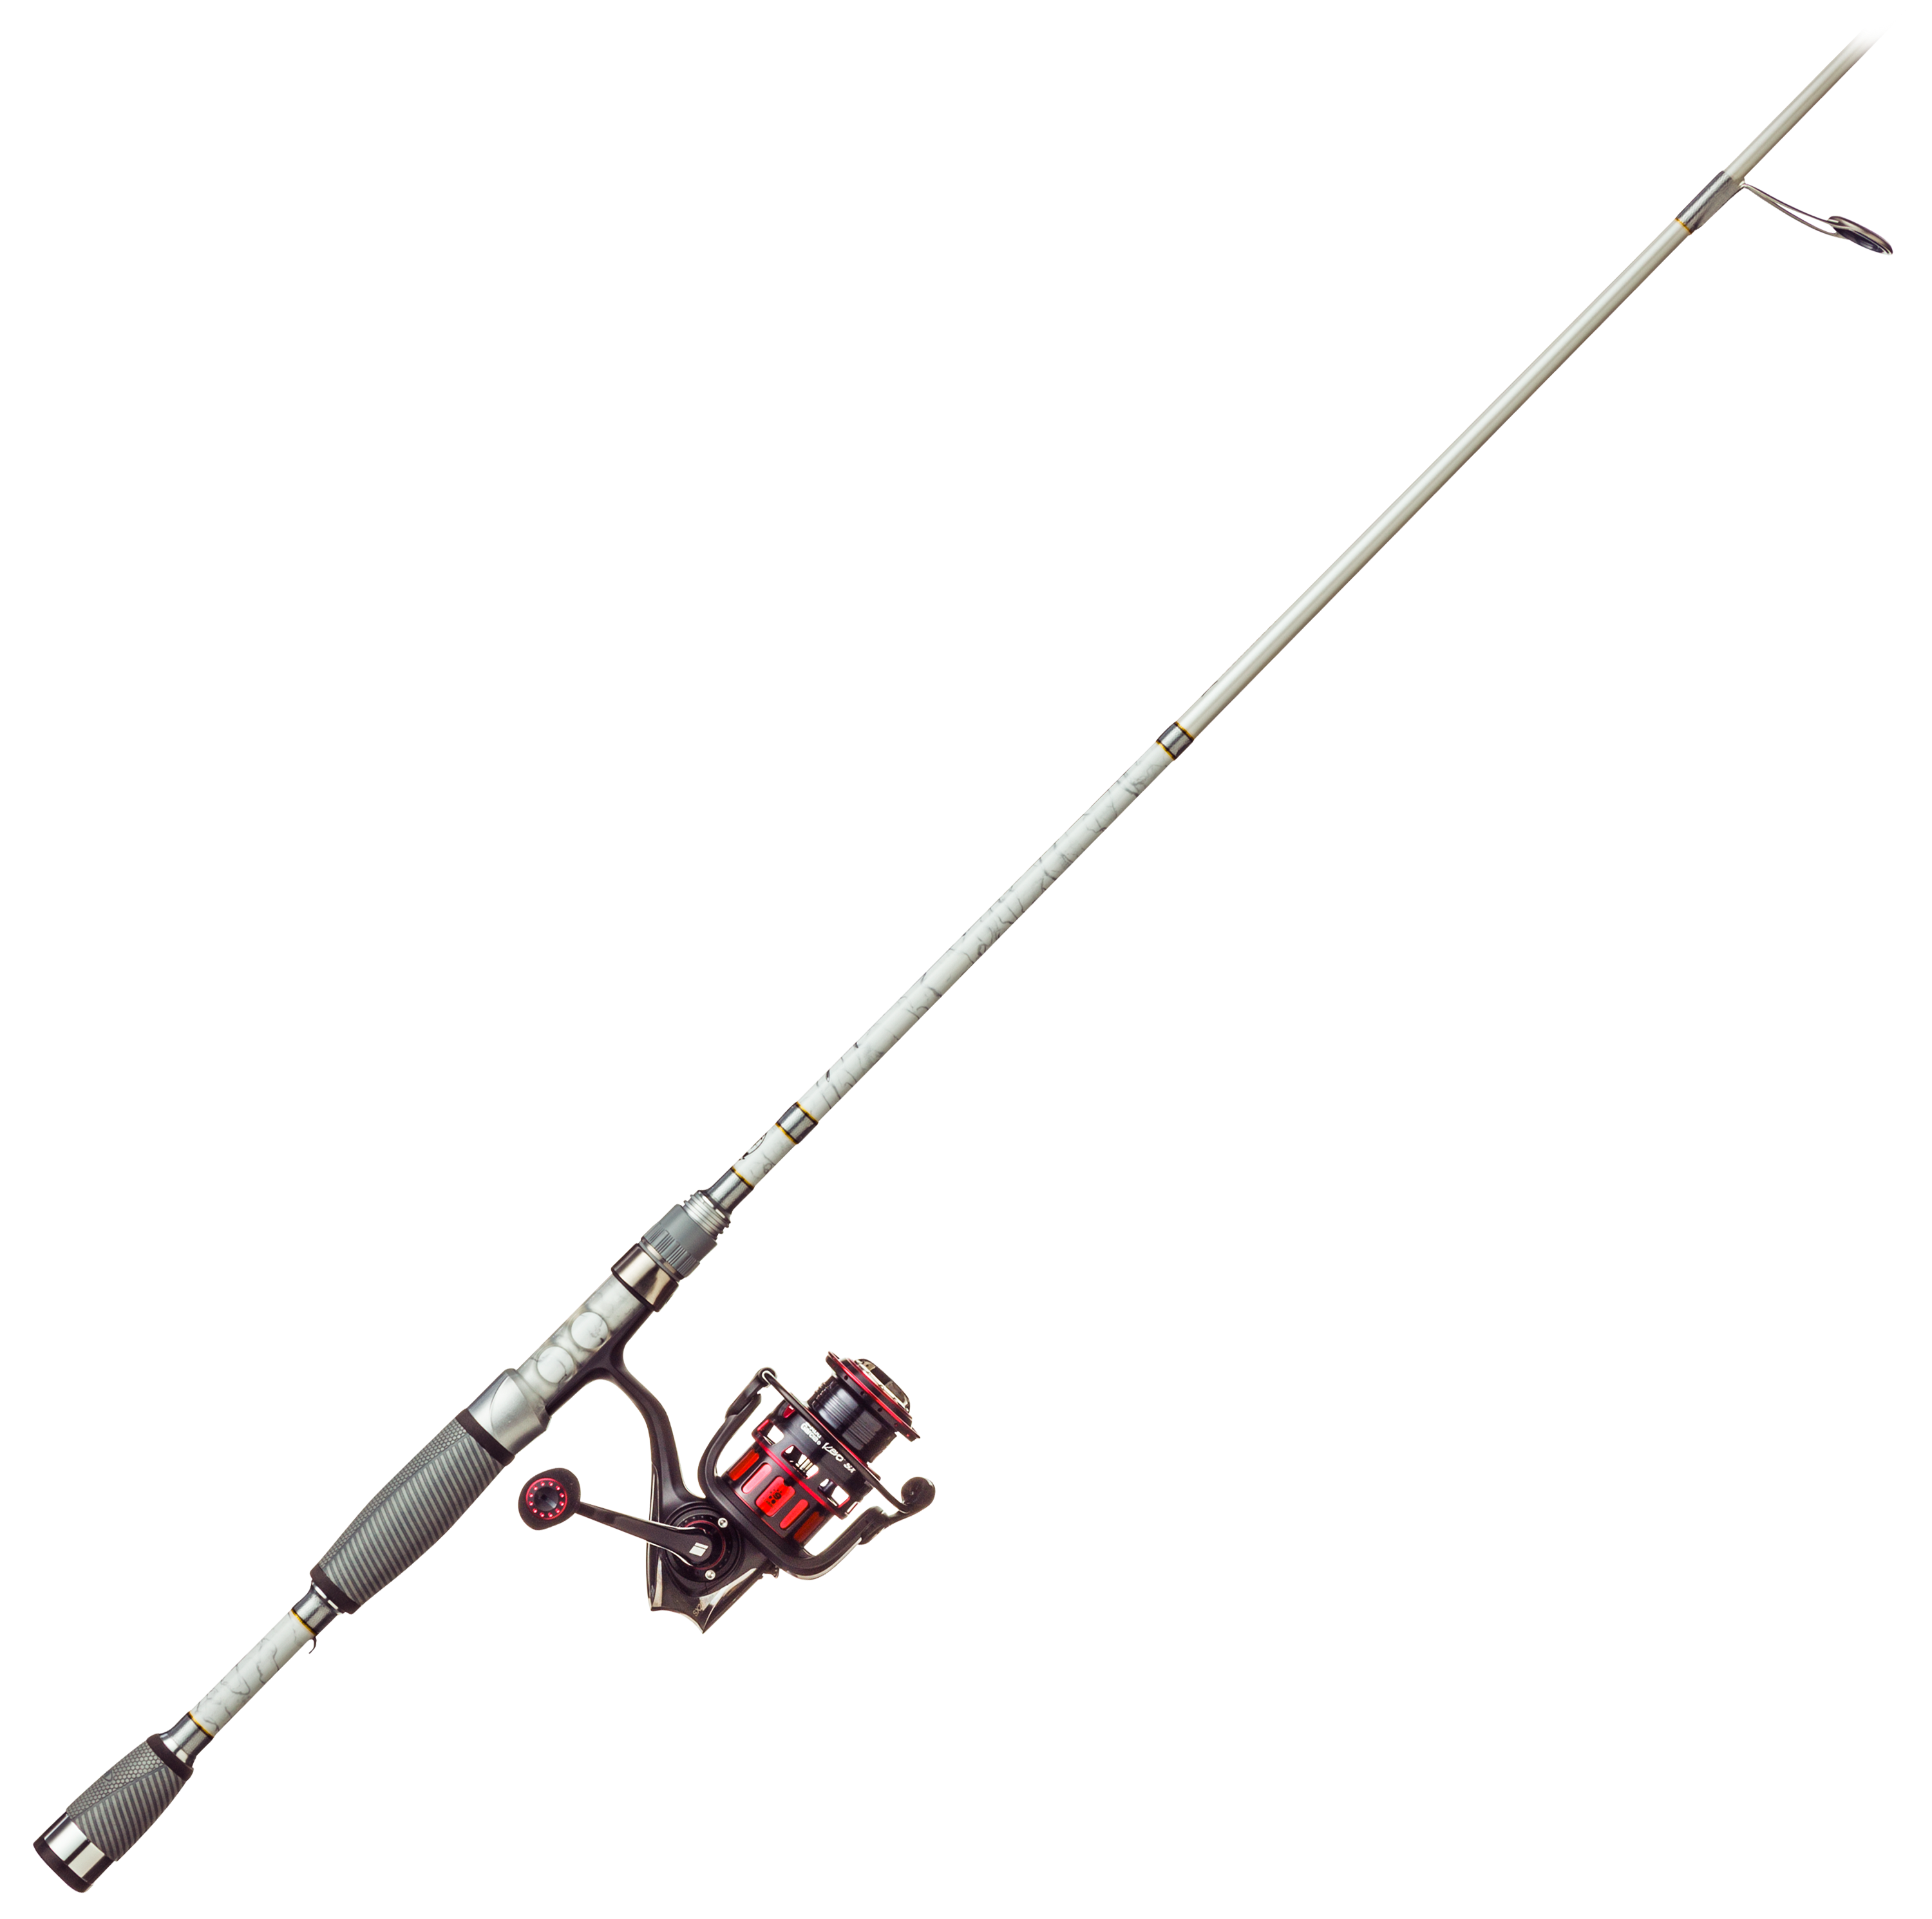 Abu Garcia Revo SX/Bass Pro Shops Johnny Morris CarbonLite Spinning Rod and Reel Combo - Model REVO2SX20/JCT70MHSF